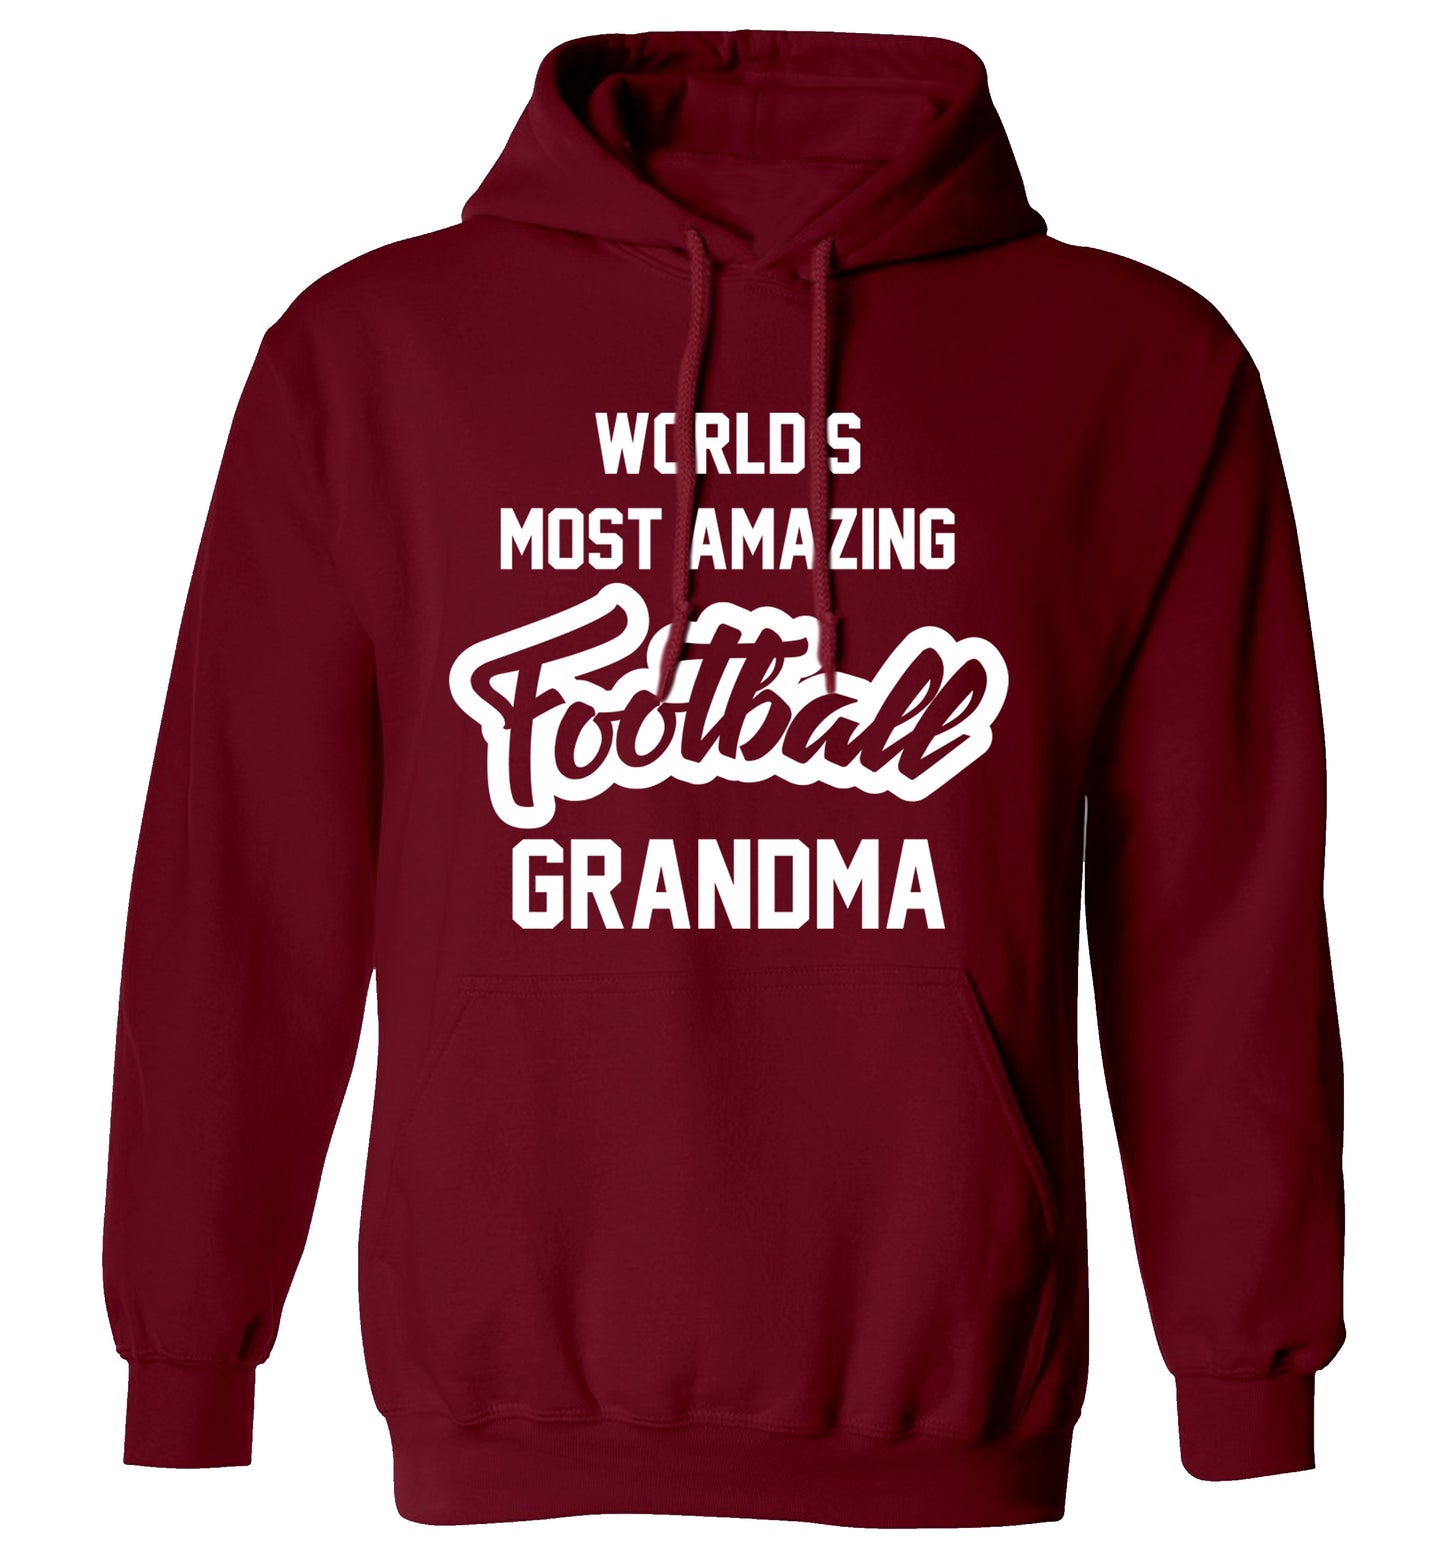 Worlds most amazing football grandma adults unisexmaroon hoodie 2XL